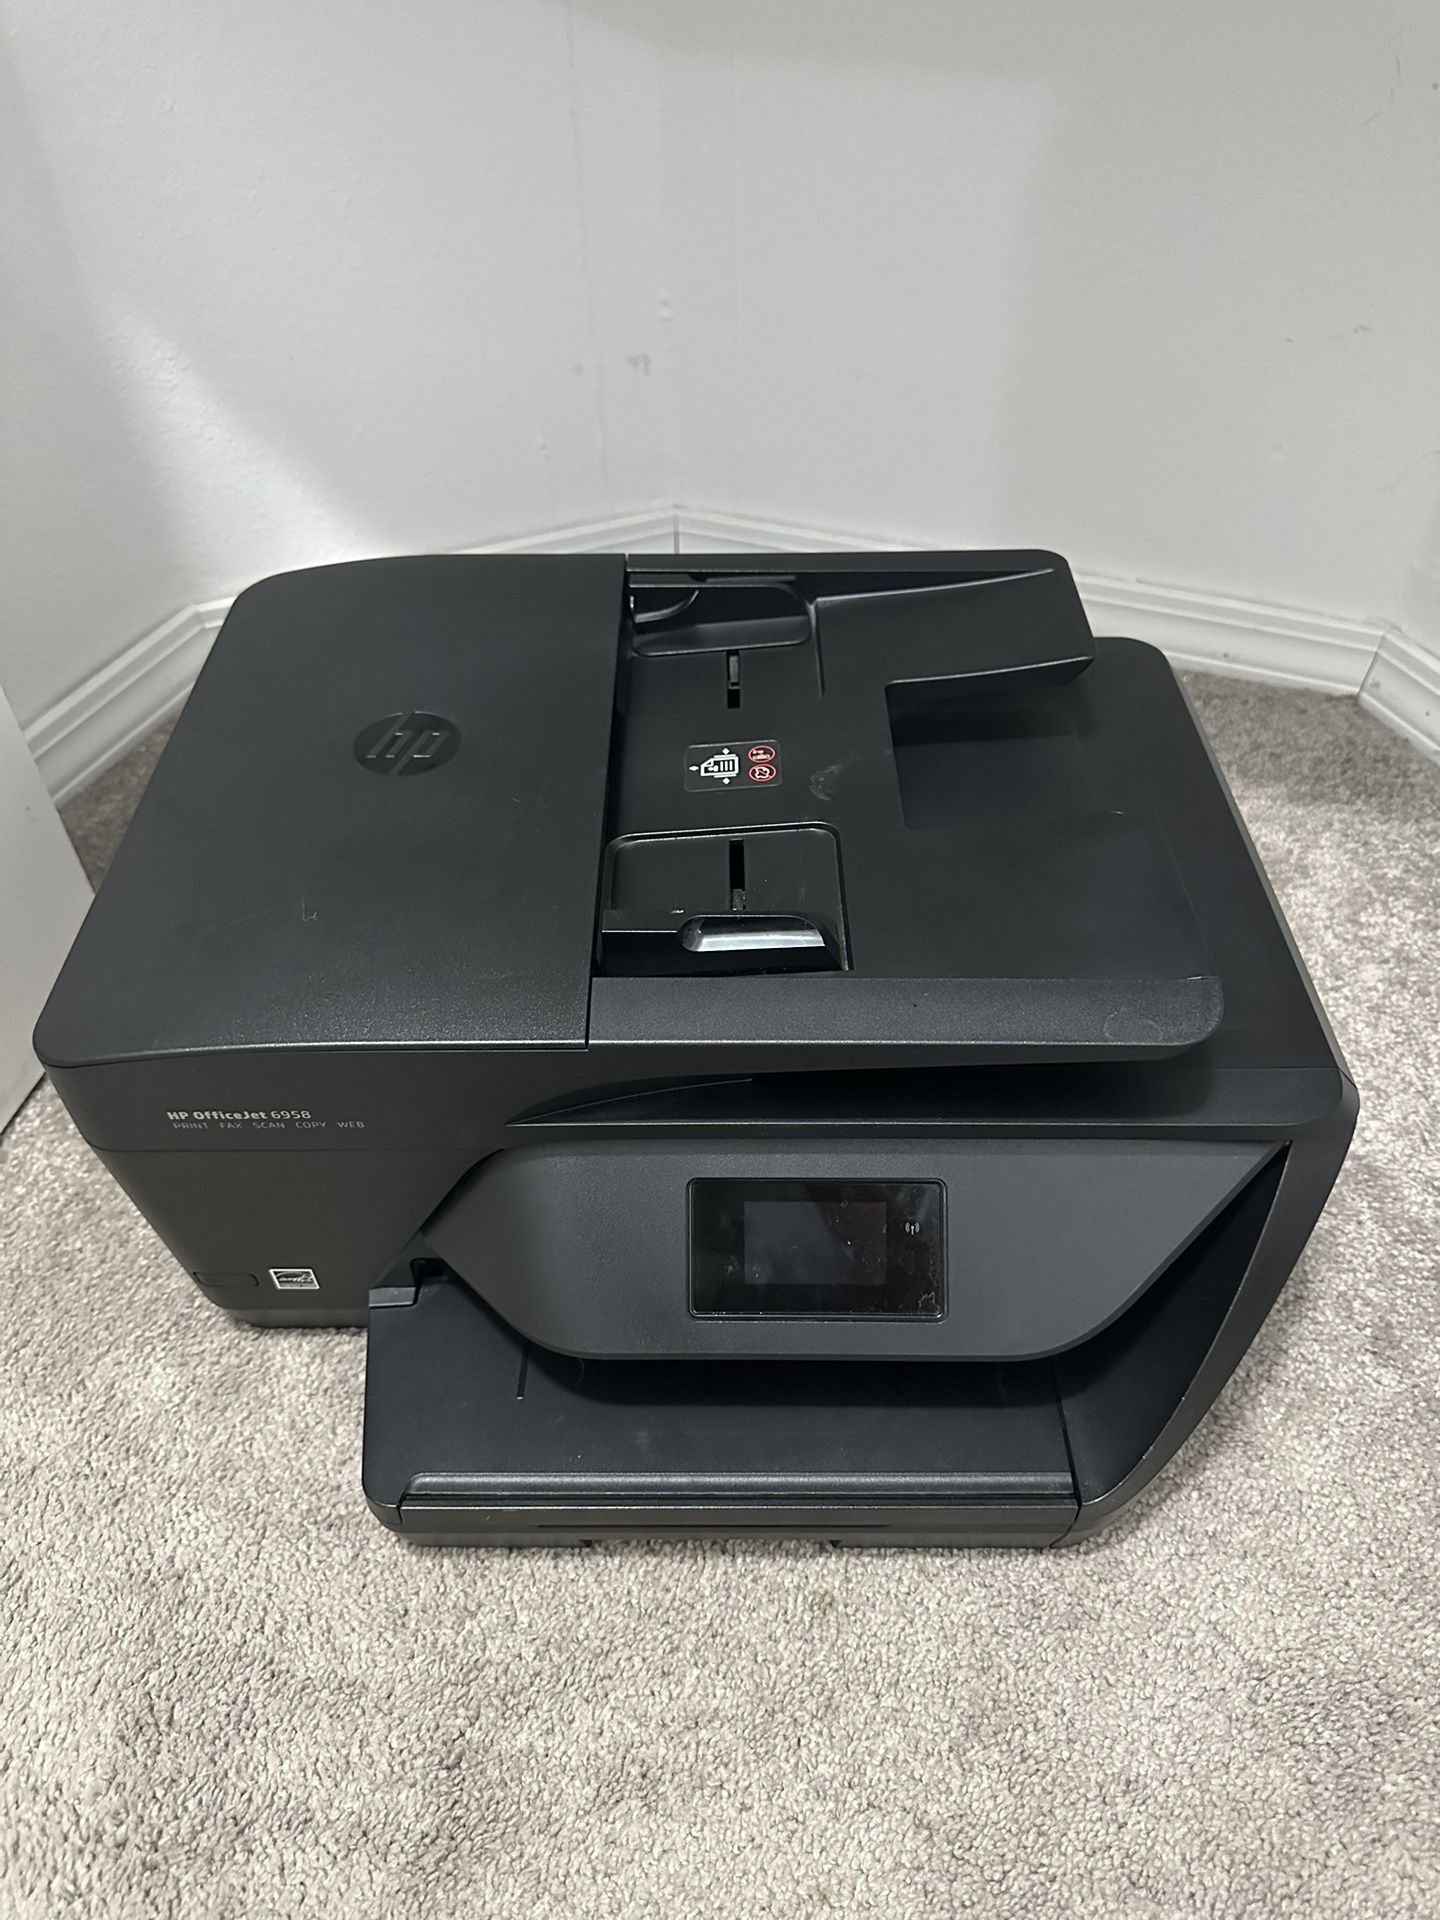 hp Printer 